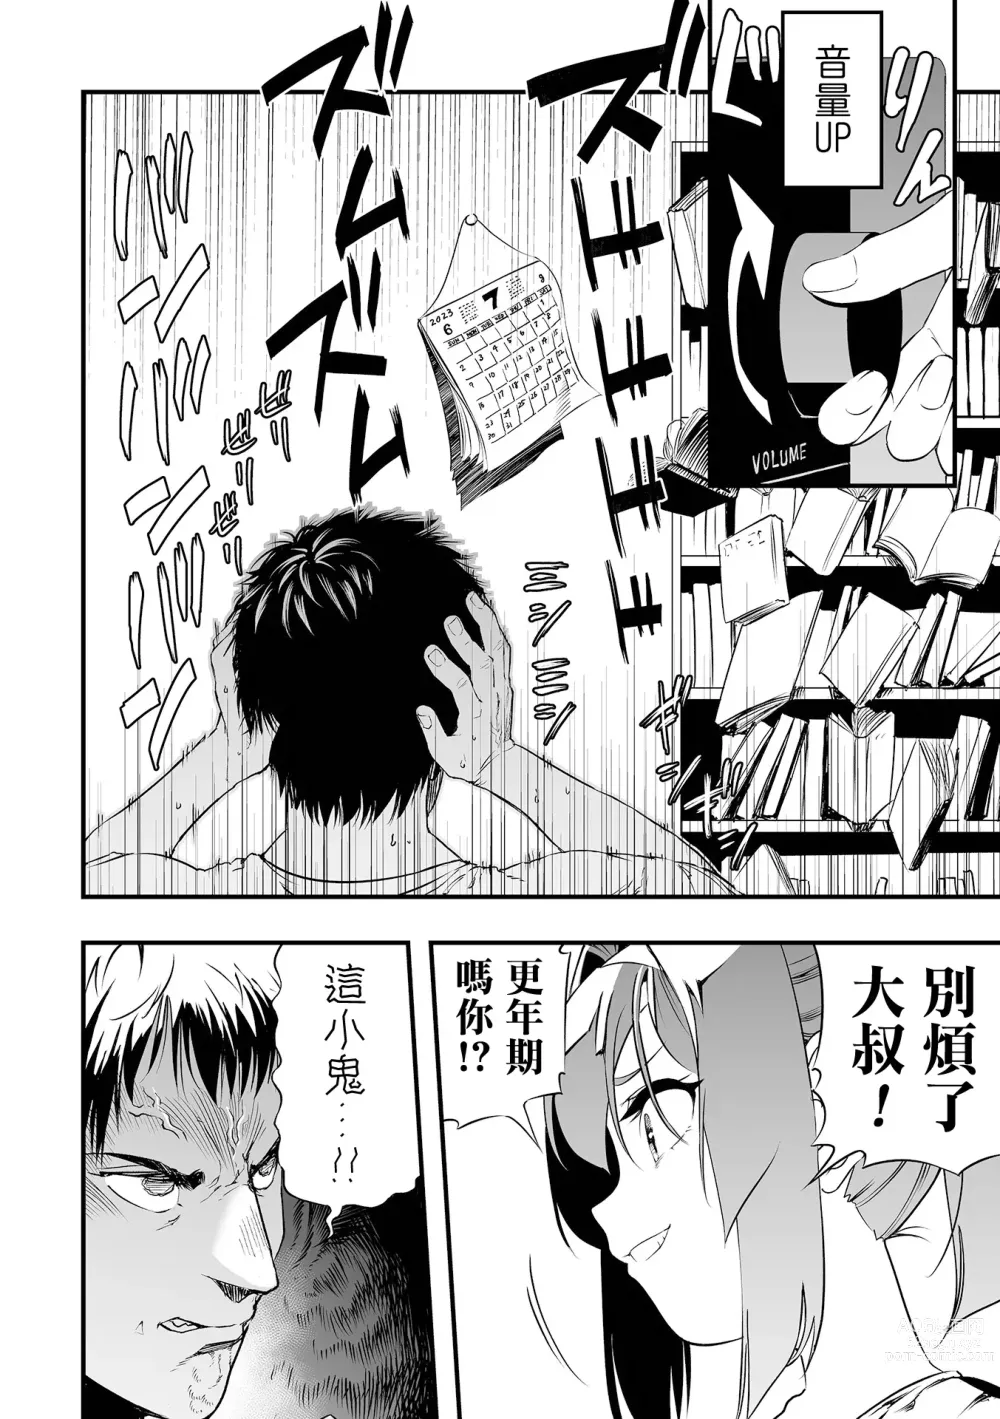 Page 3 of manga 鄰居的壁咚X